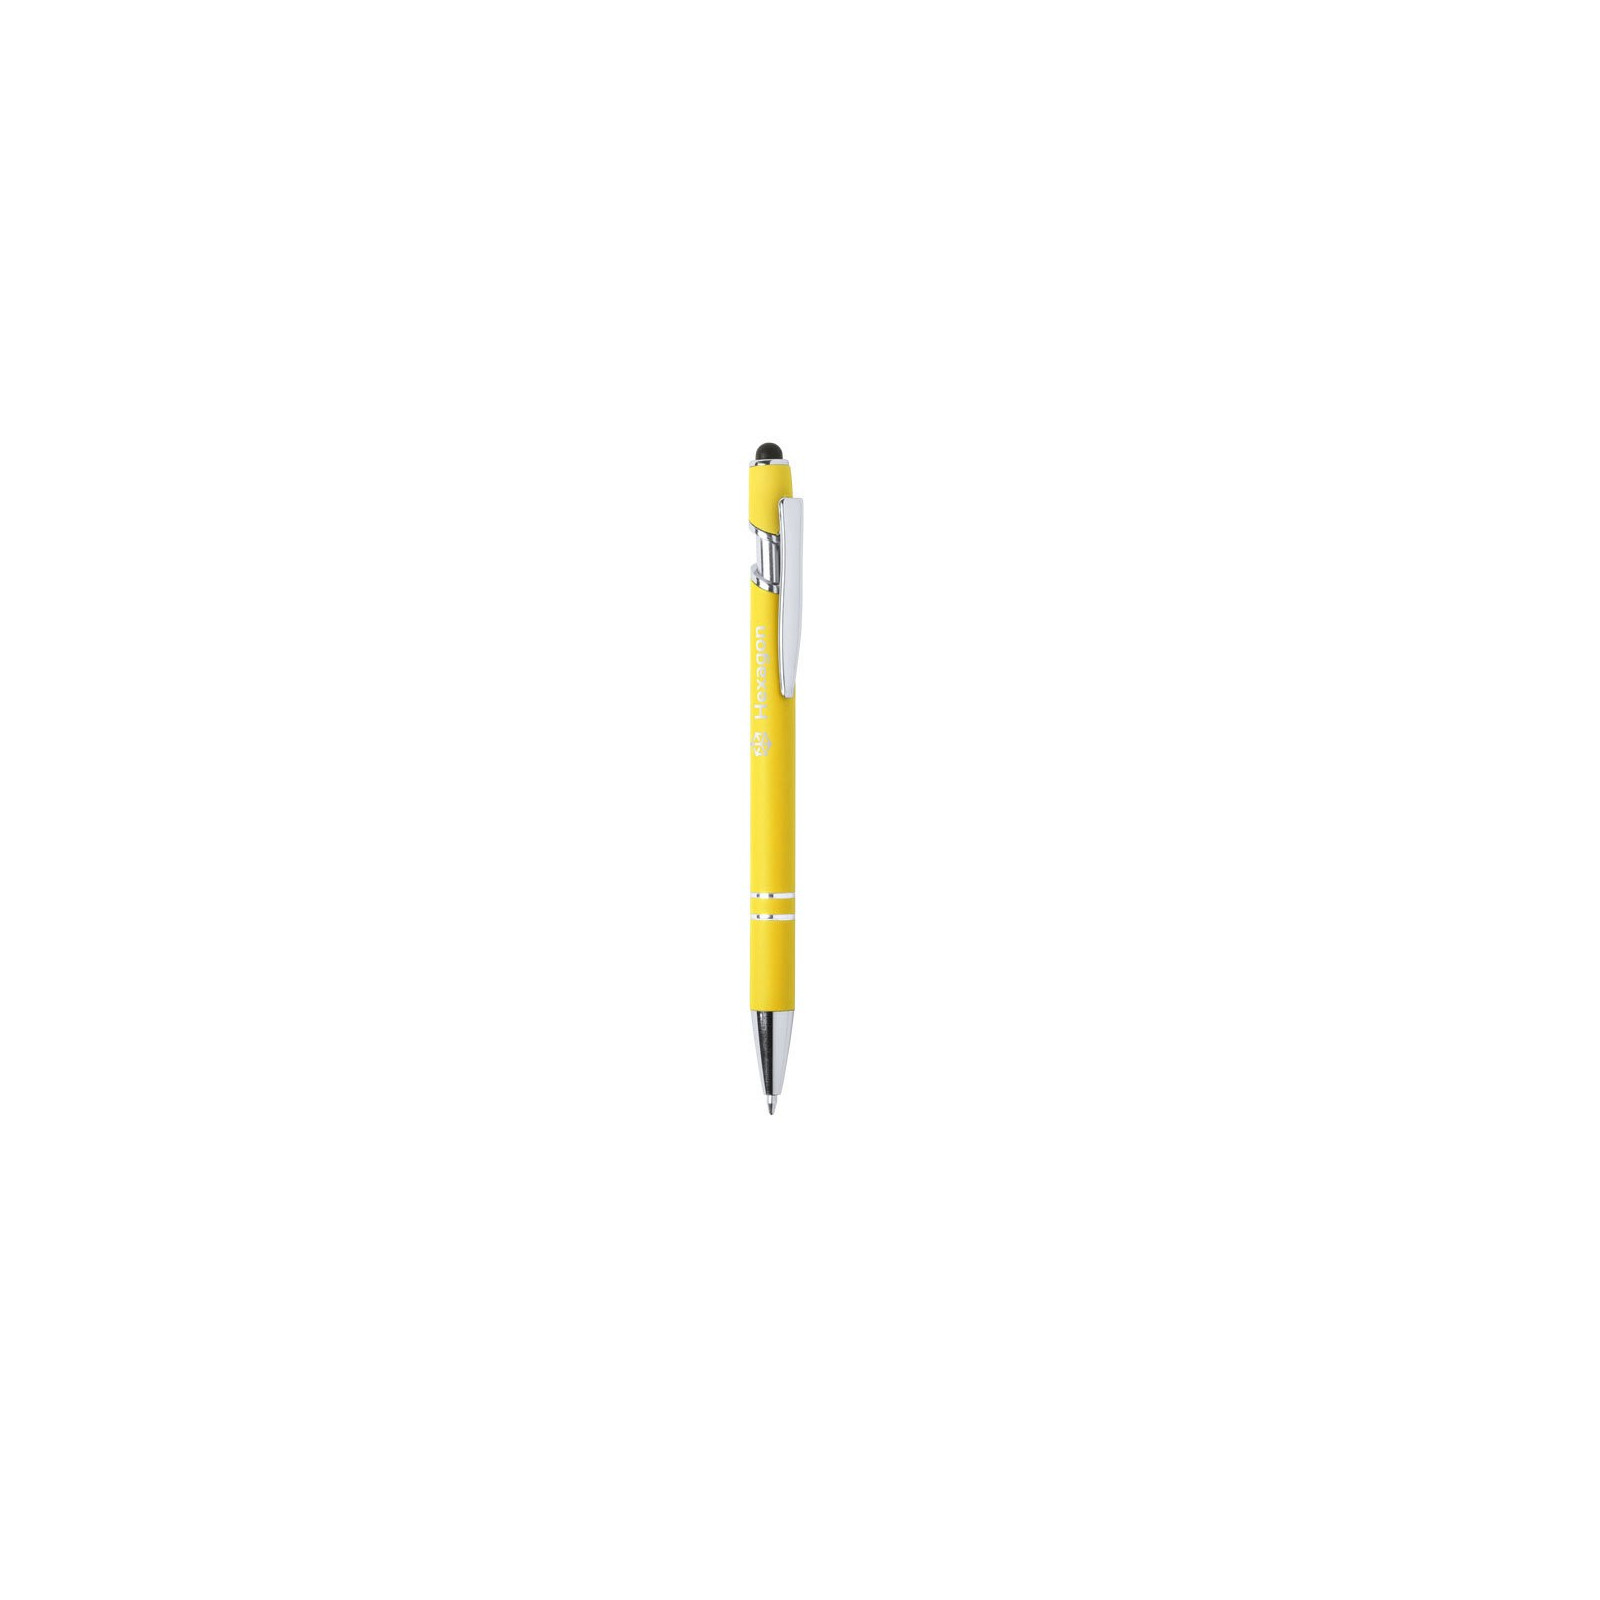 Lekor pointer pen